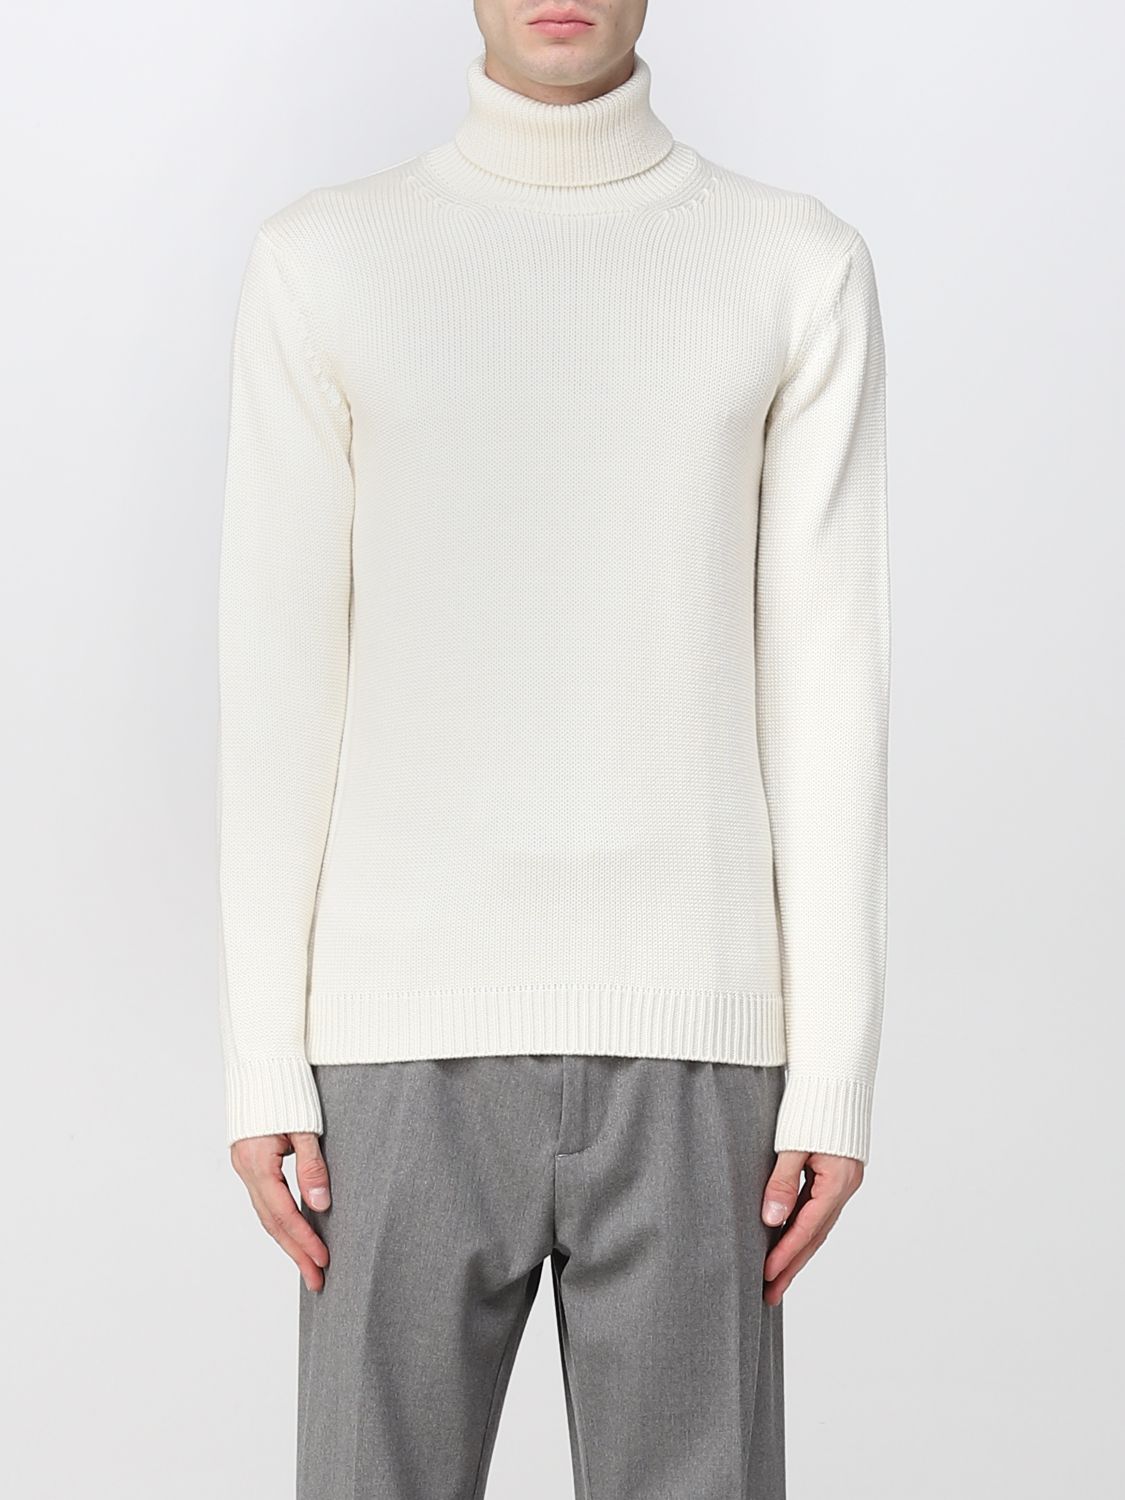 ROBERTO COLLINA: sweater for man - White | Roberto Collina sweater ...